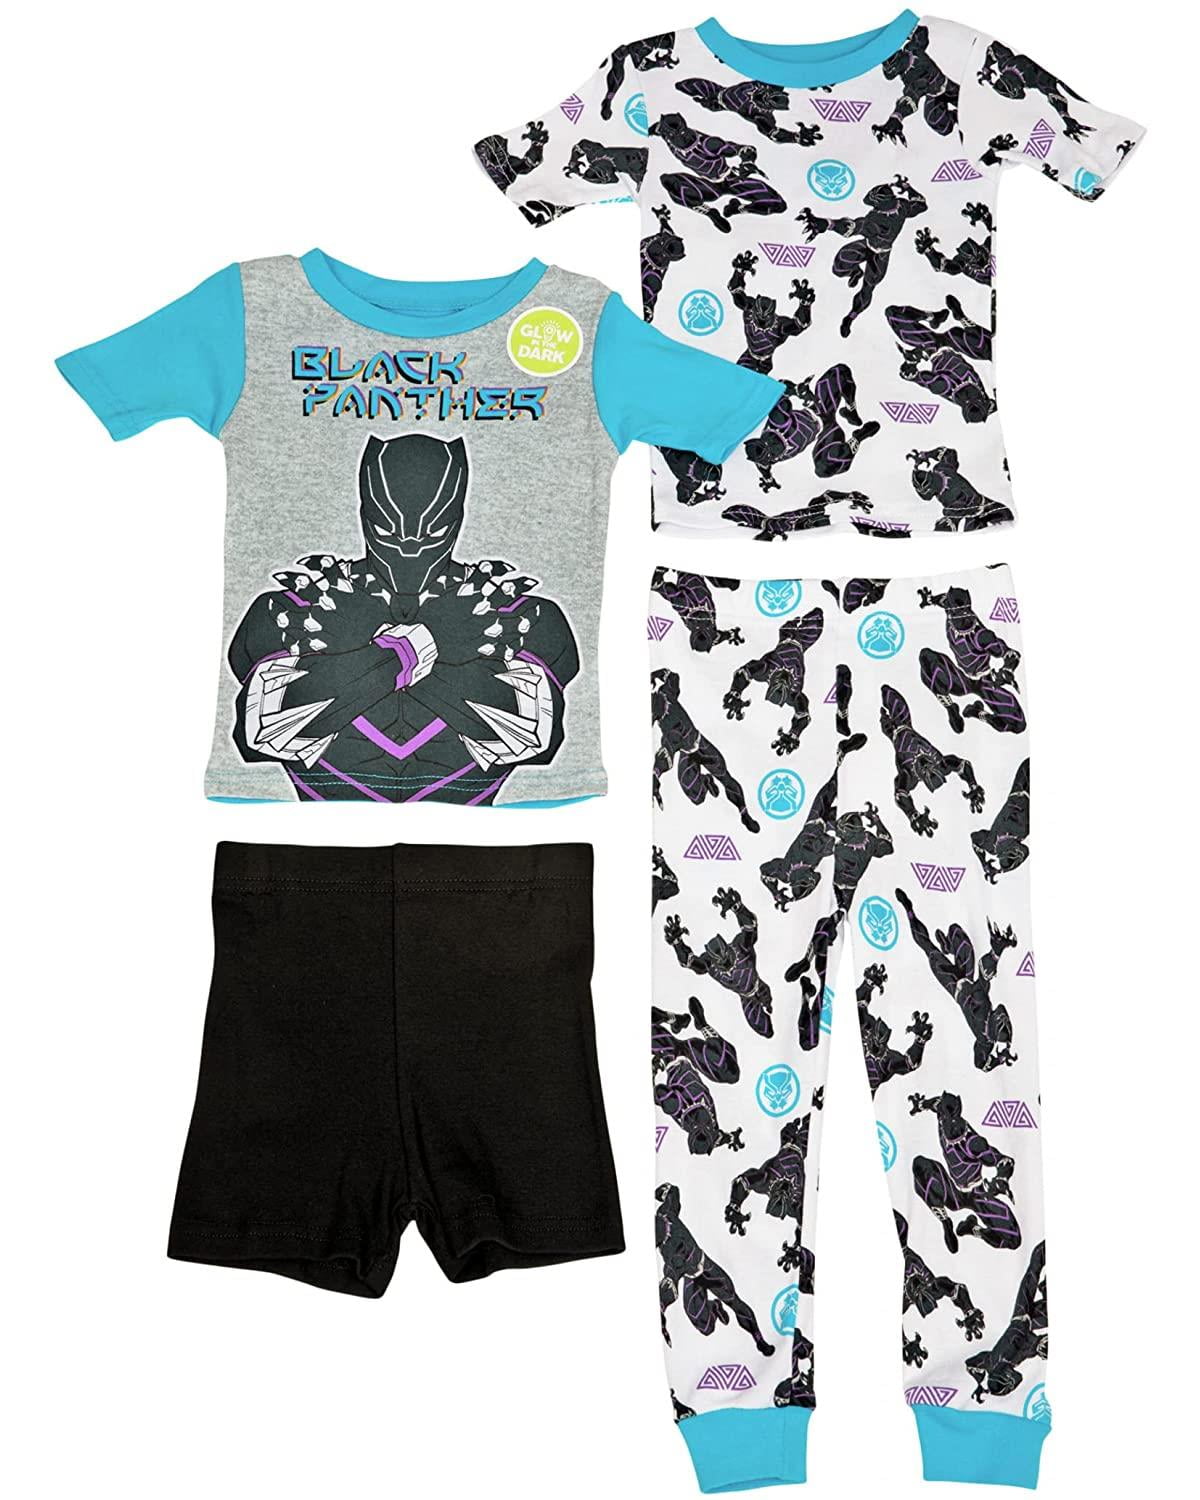 Details about   NWT Disney Store Marvel Black Panther Pajama Set Sz 3T 